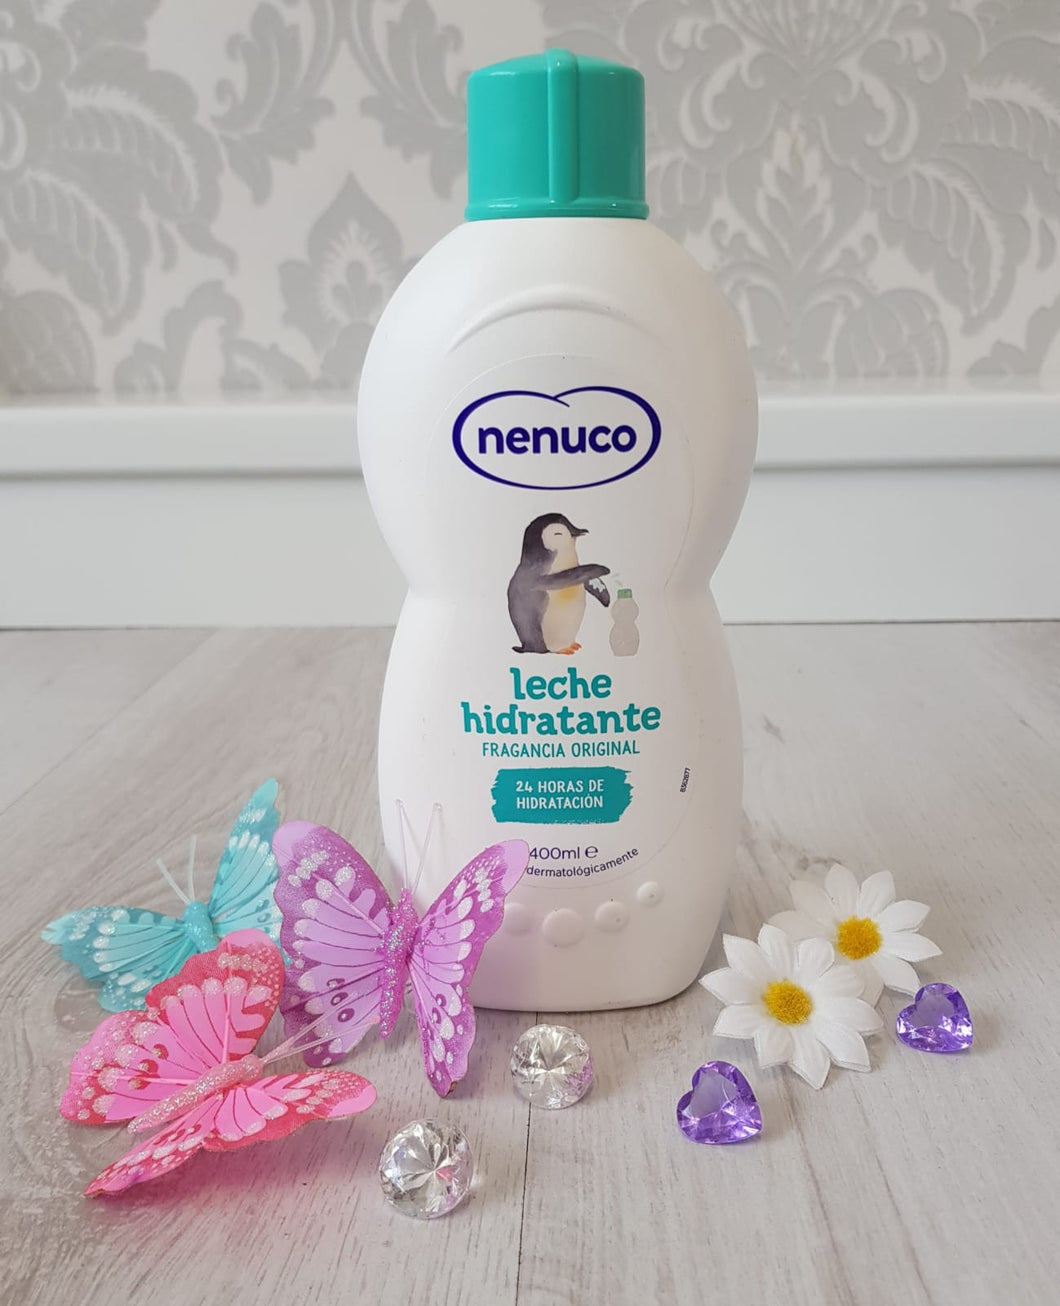 Nenuco moisturising milk 400ml 🍋